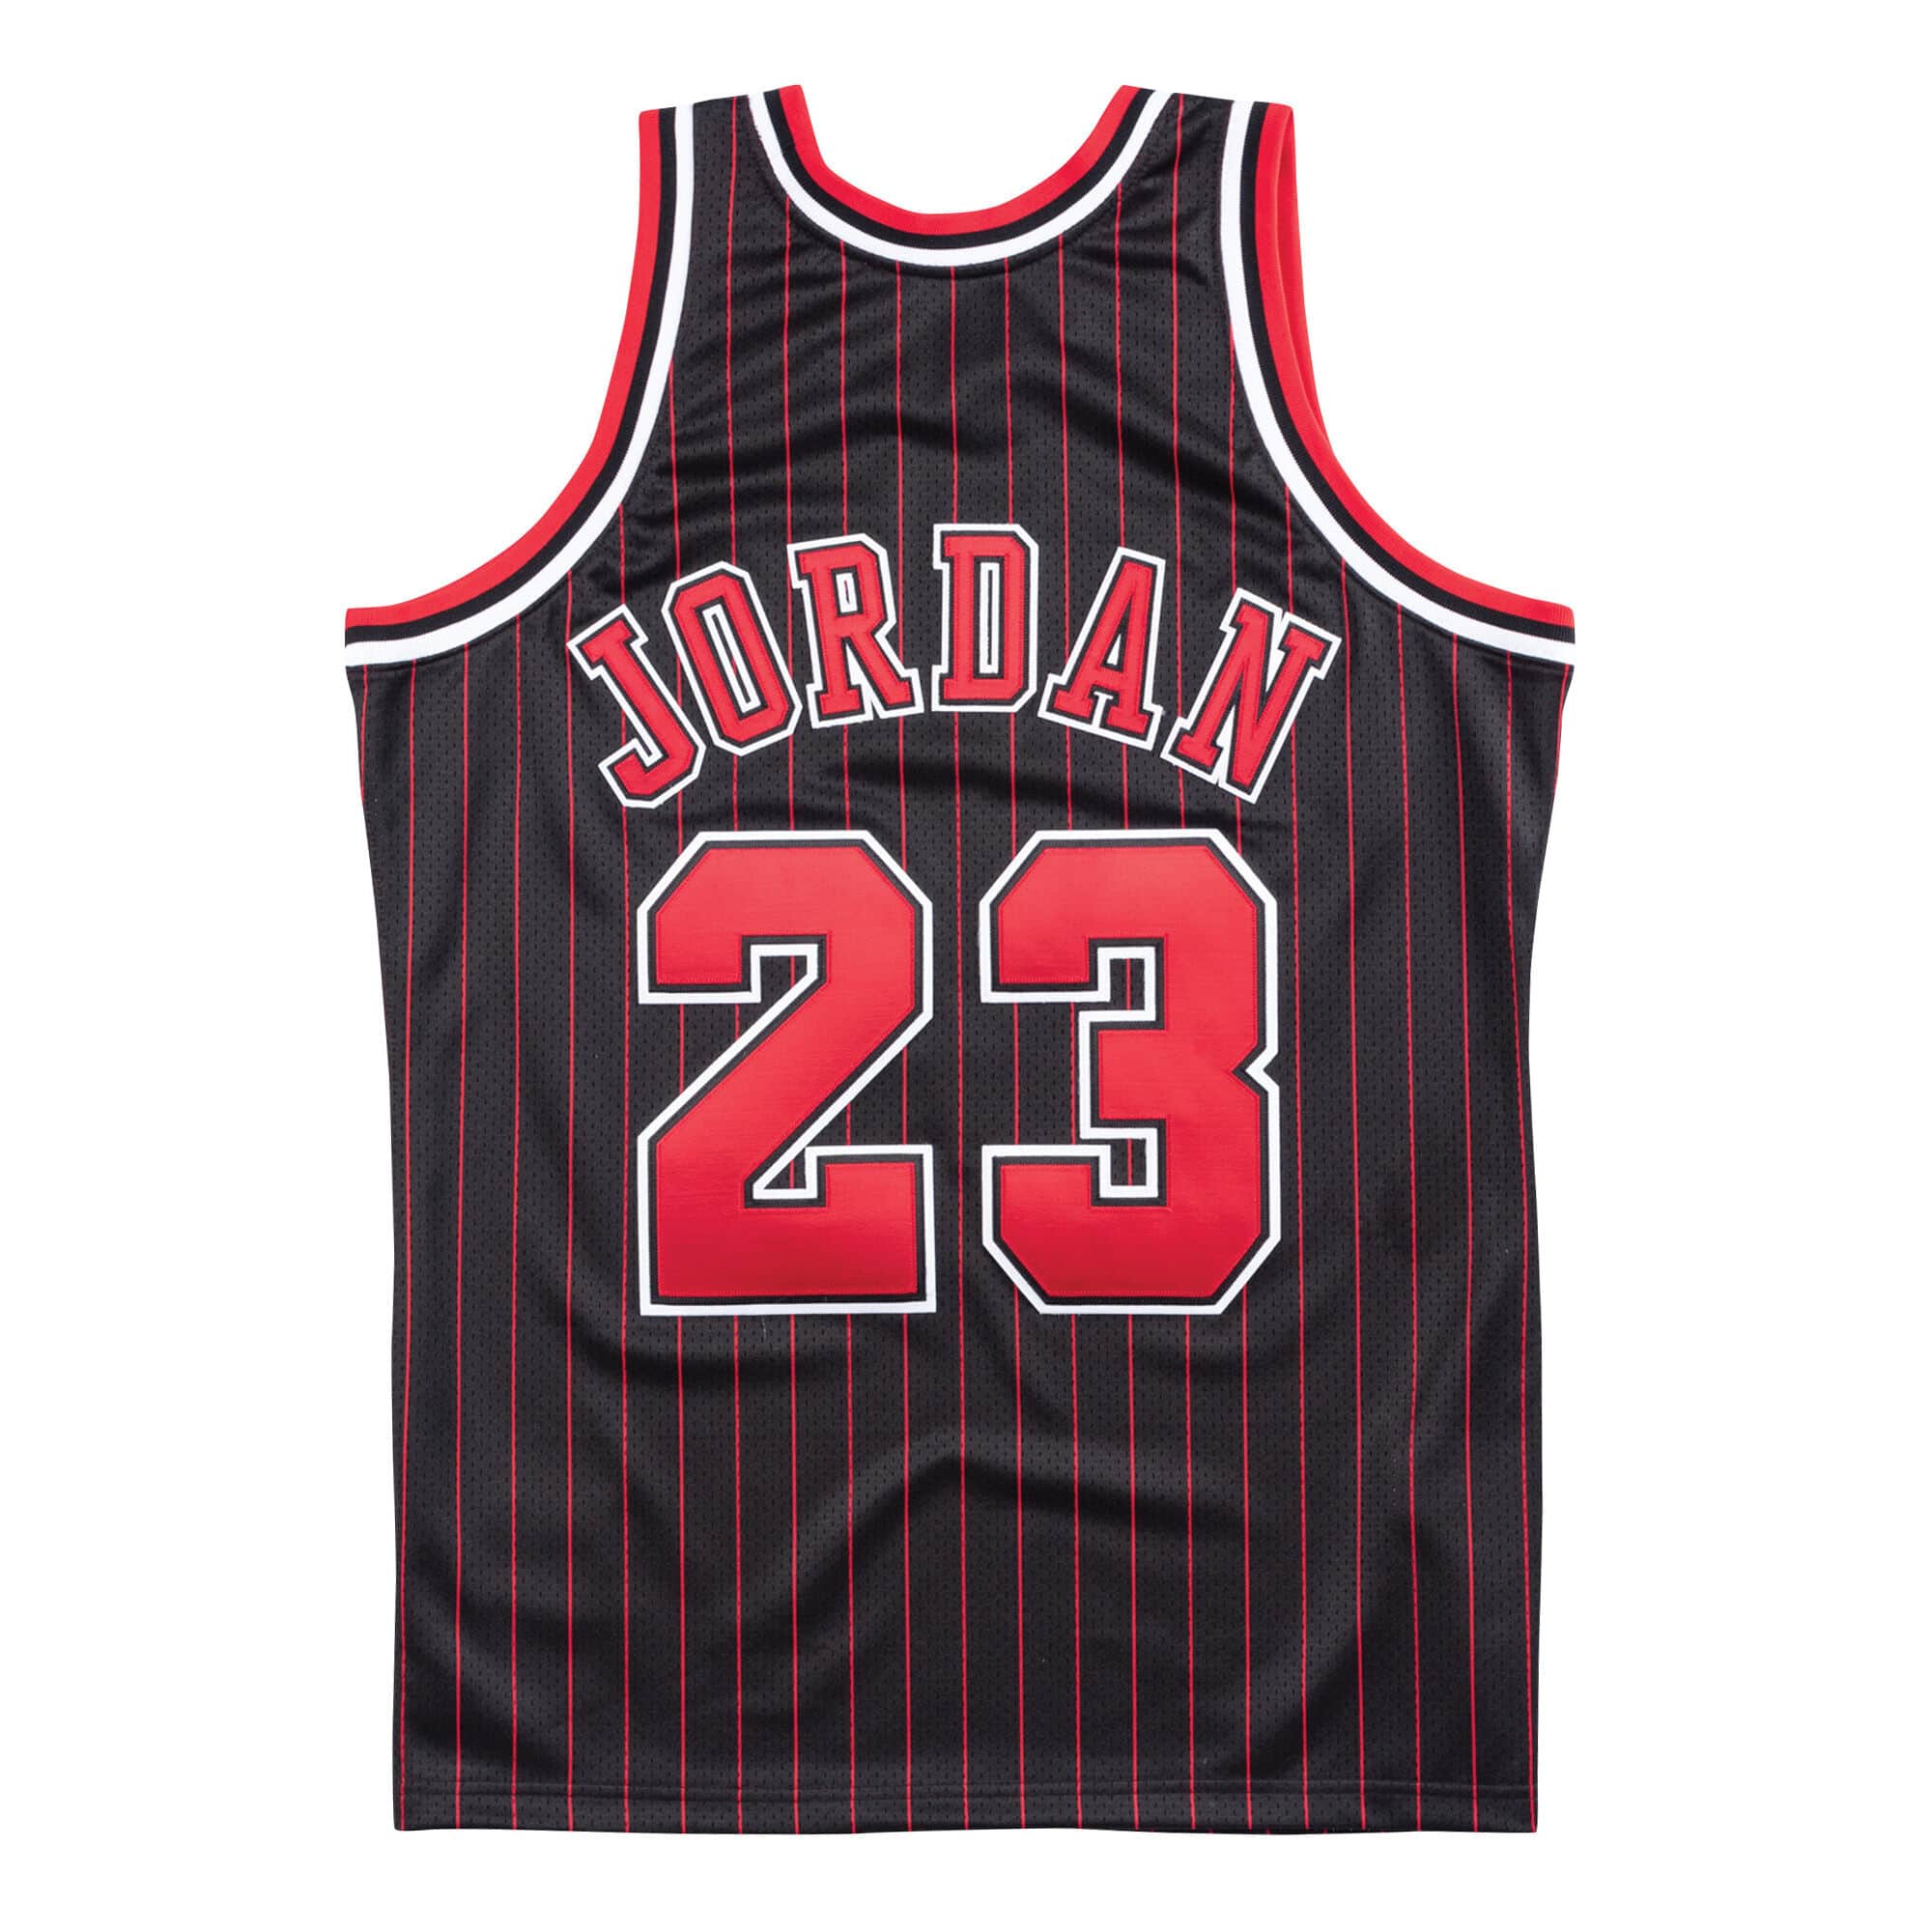 Vintage Michael Jordan Chicago Bulls Black Pinstripe Jersey